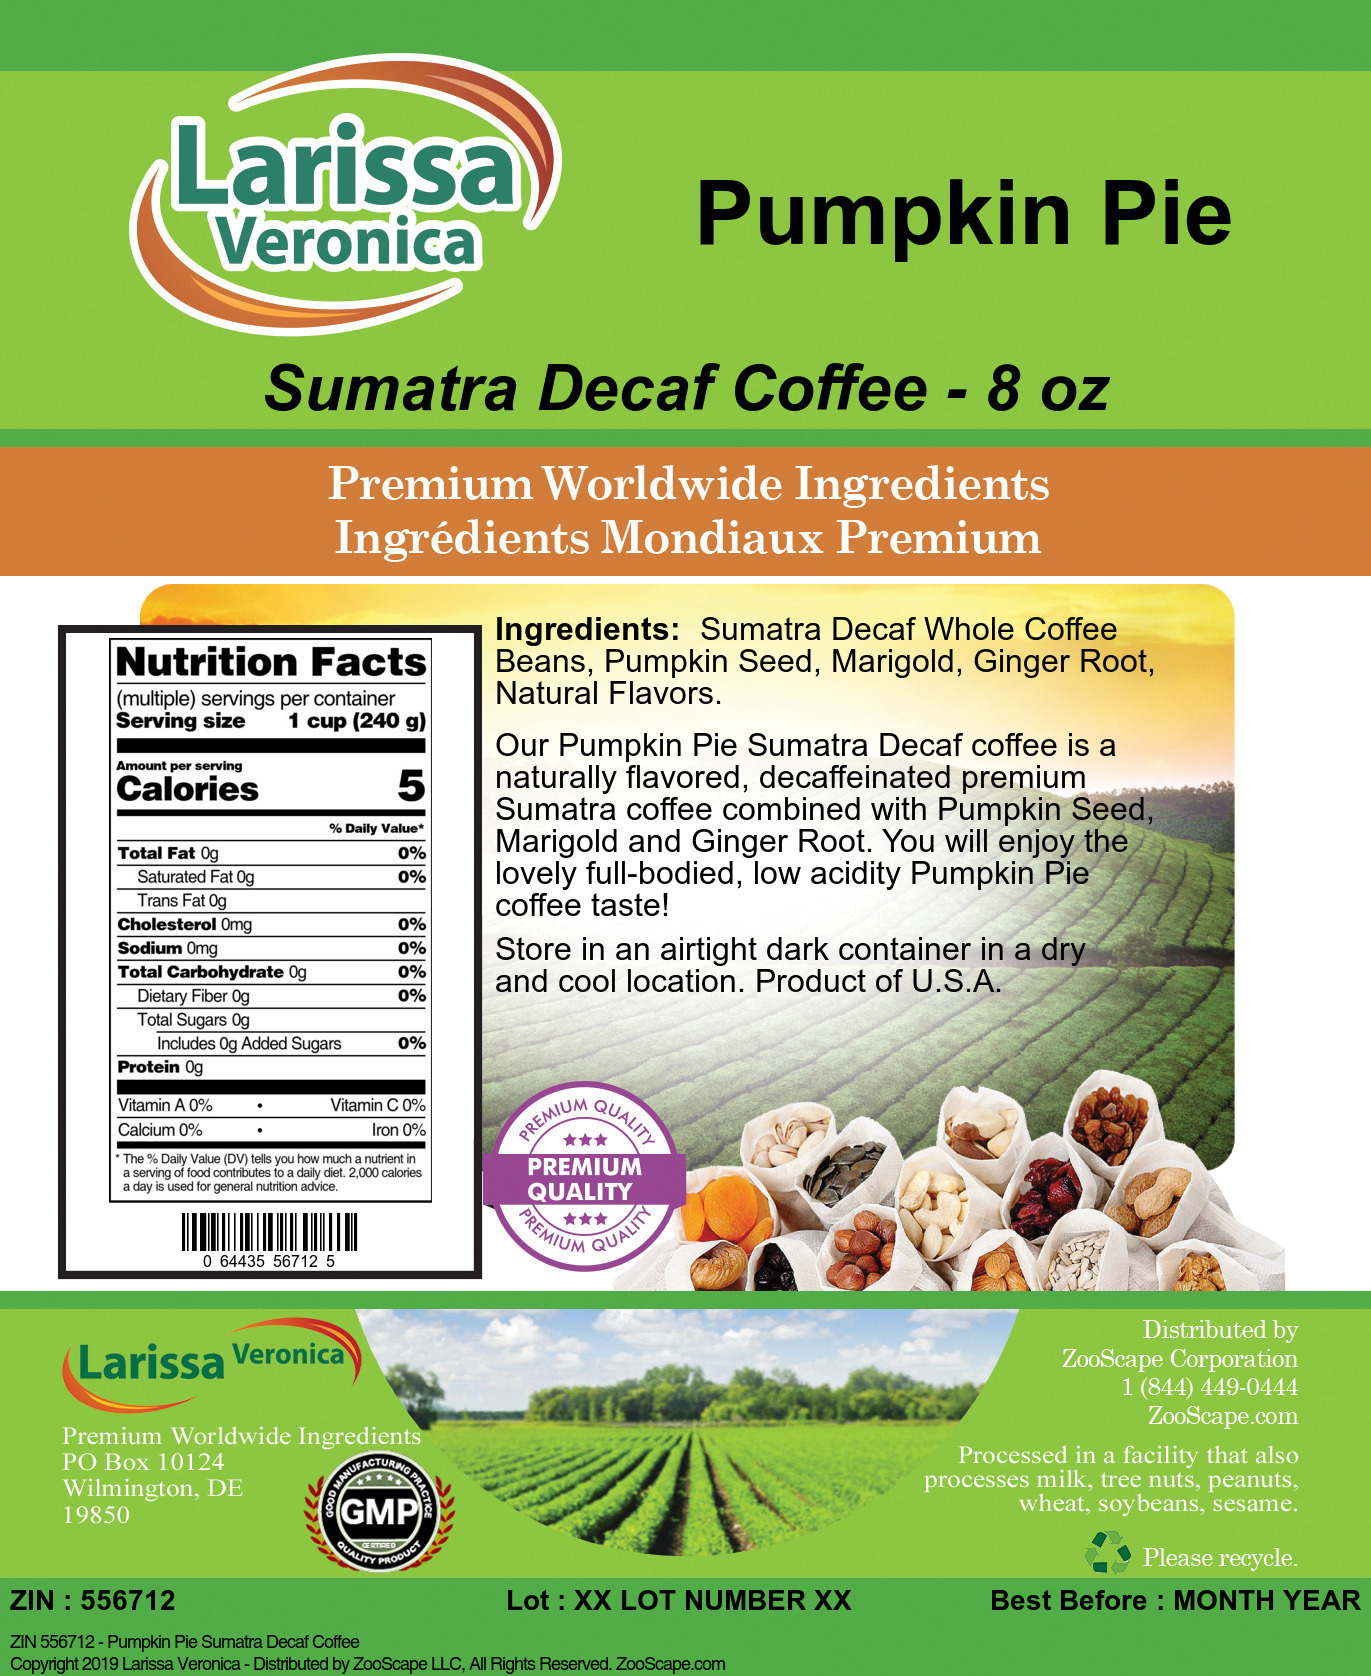 Pumpkin Pie Sumatra Decaf Coffee - Label